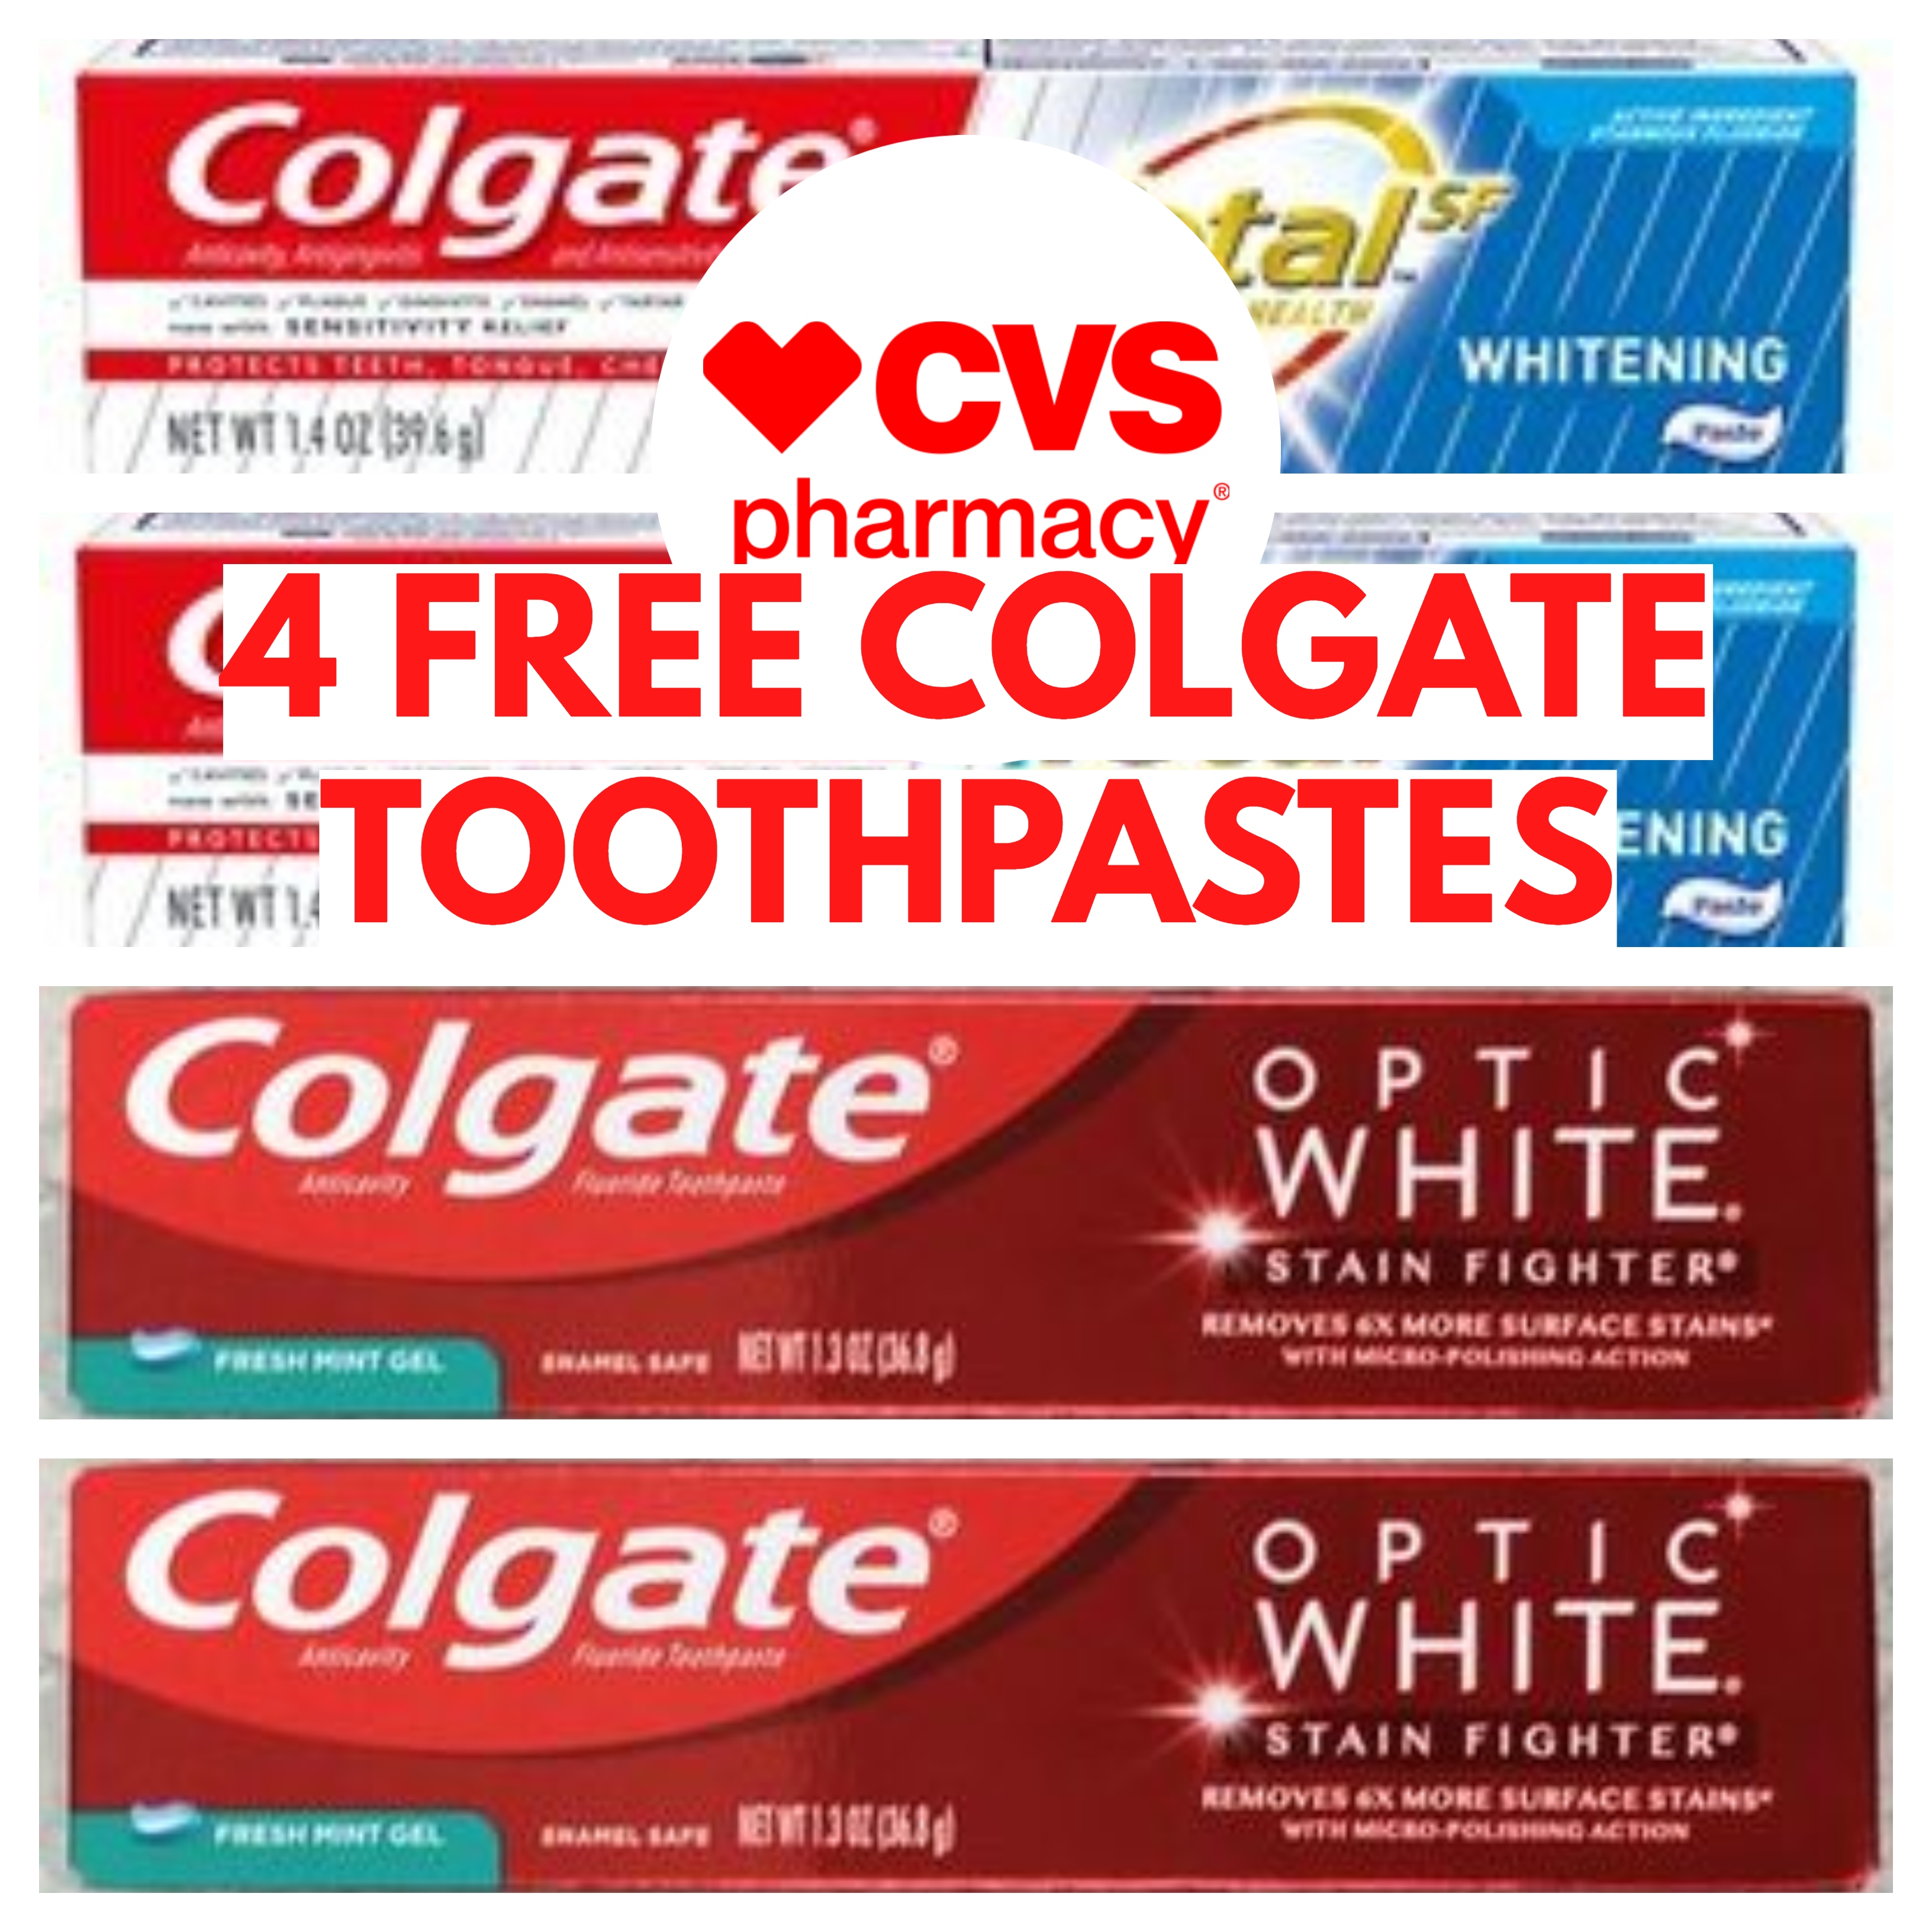 4 FREE Colgate Toothpastes at CVS